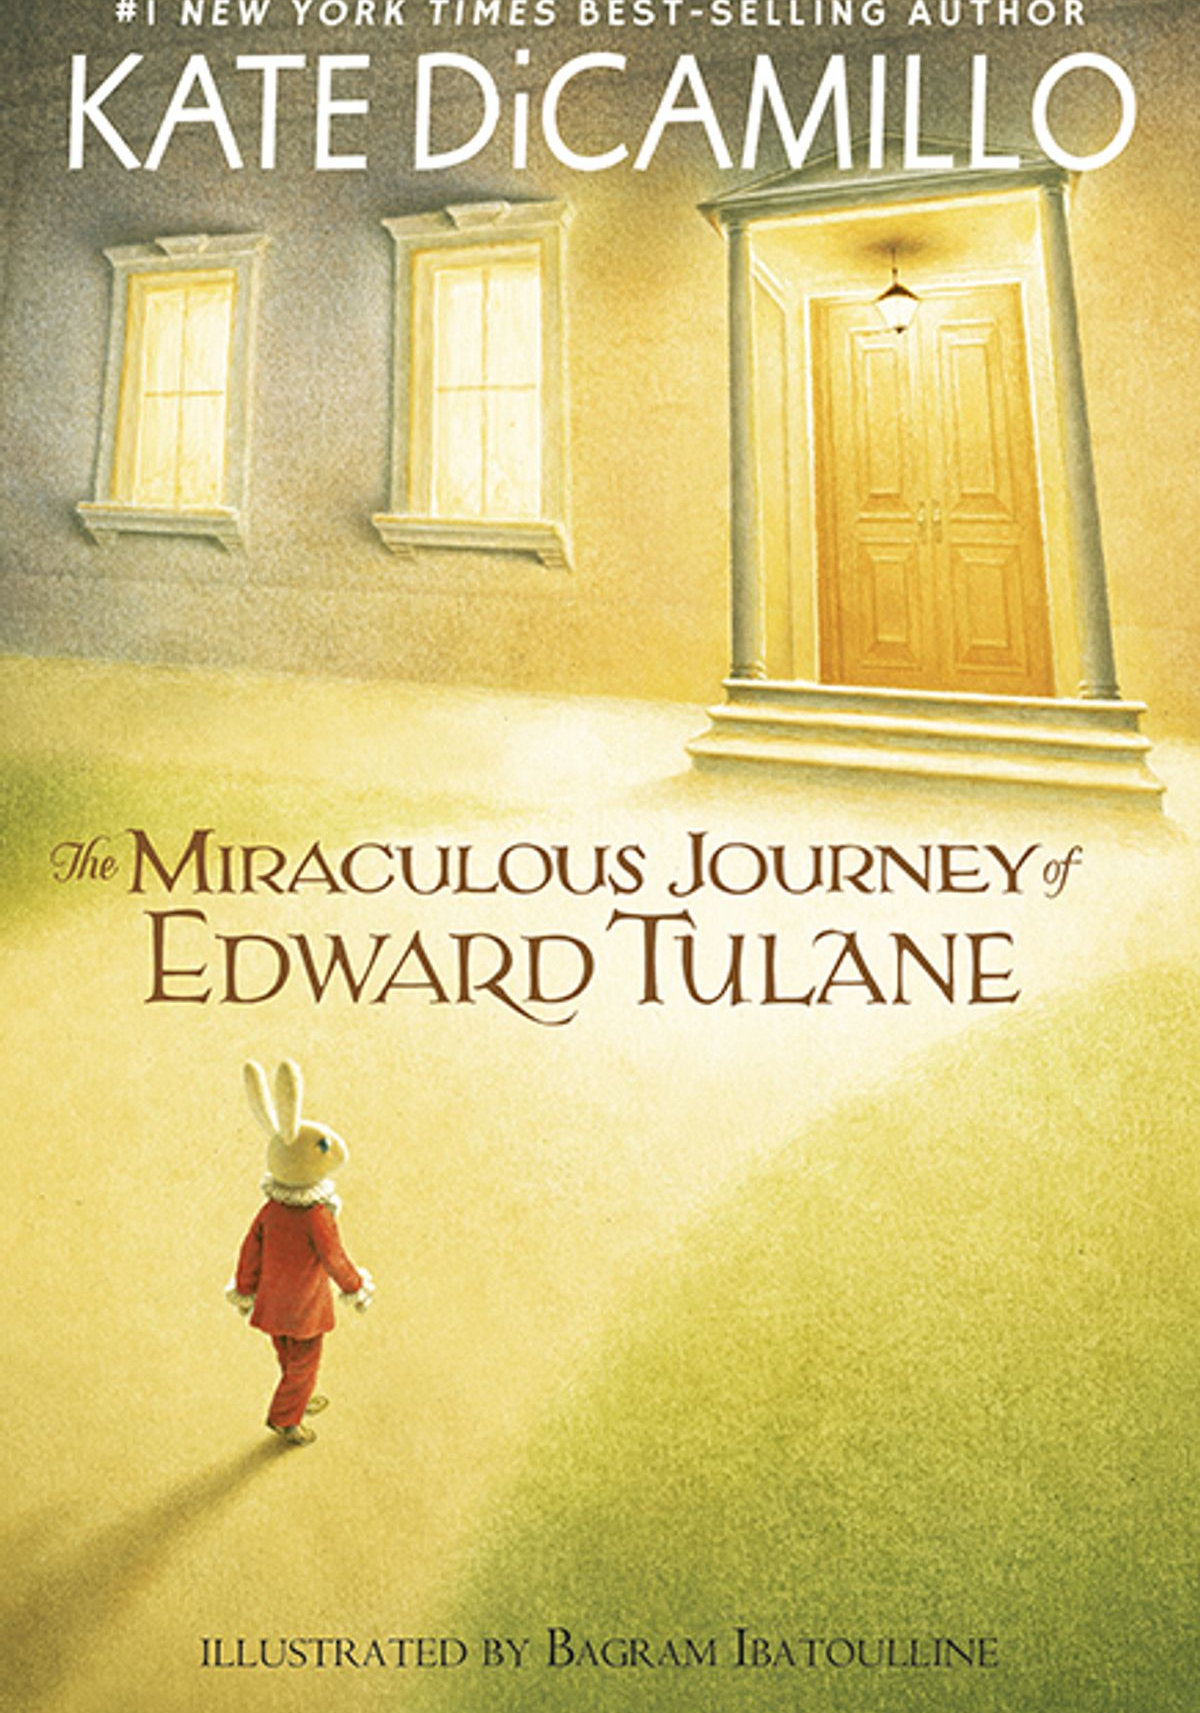 The Miraculous Journey of Edward Tulane (Kate DiCamillo, 2019)